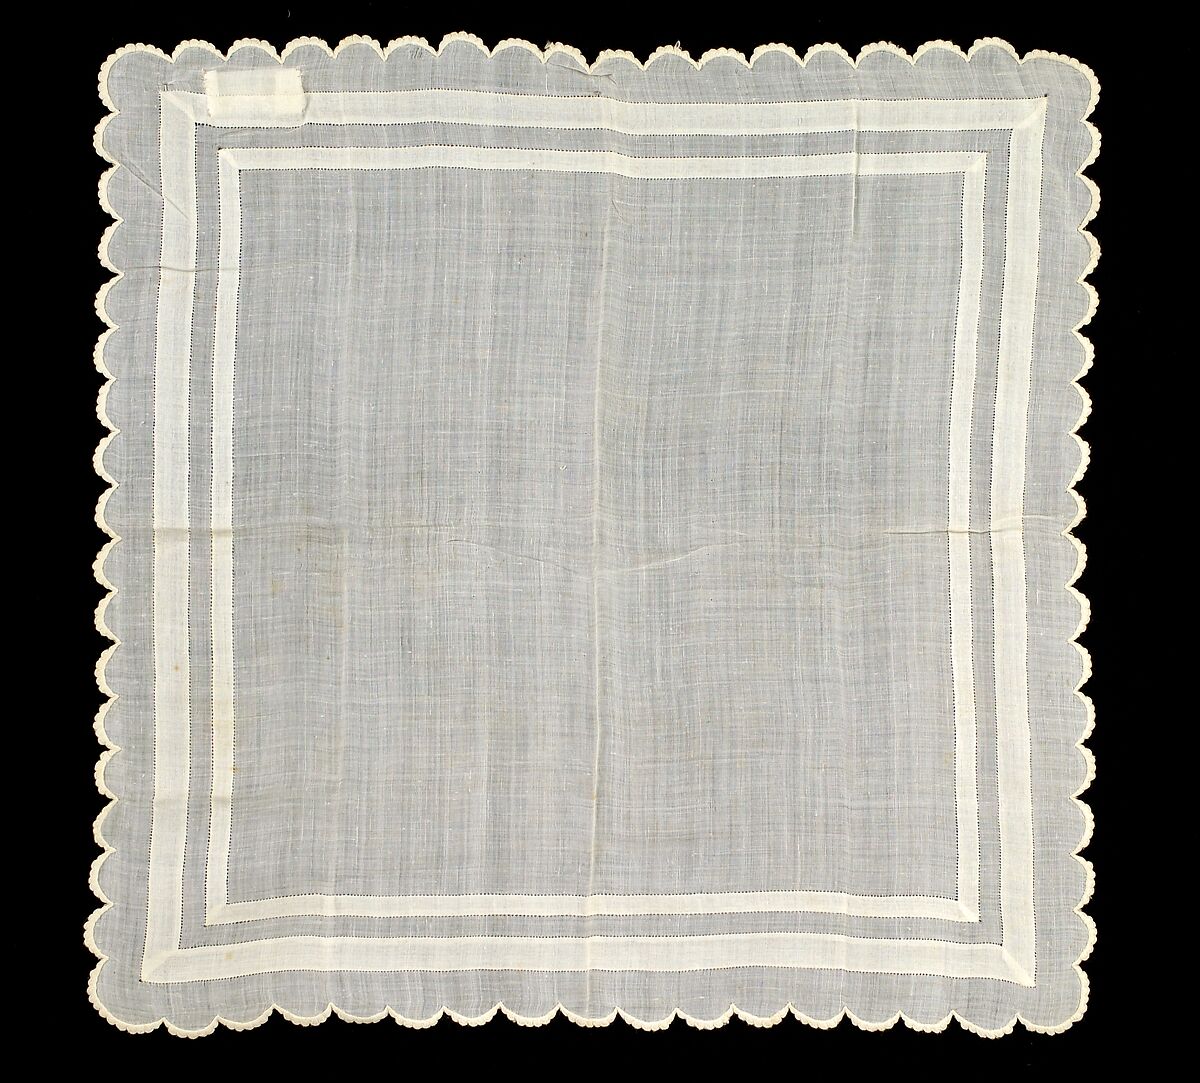 Handkerchief | American | The Metropolitan Museum of Art